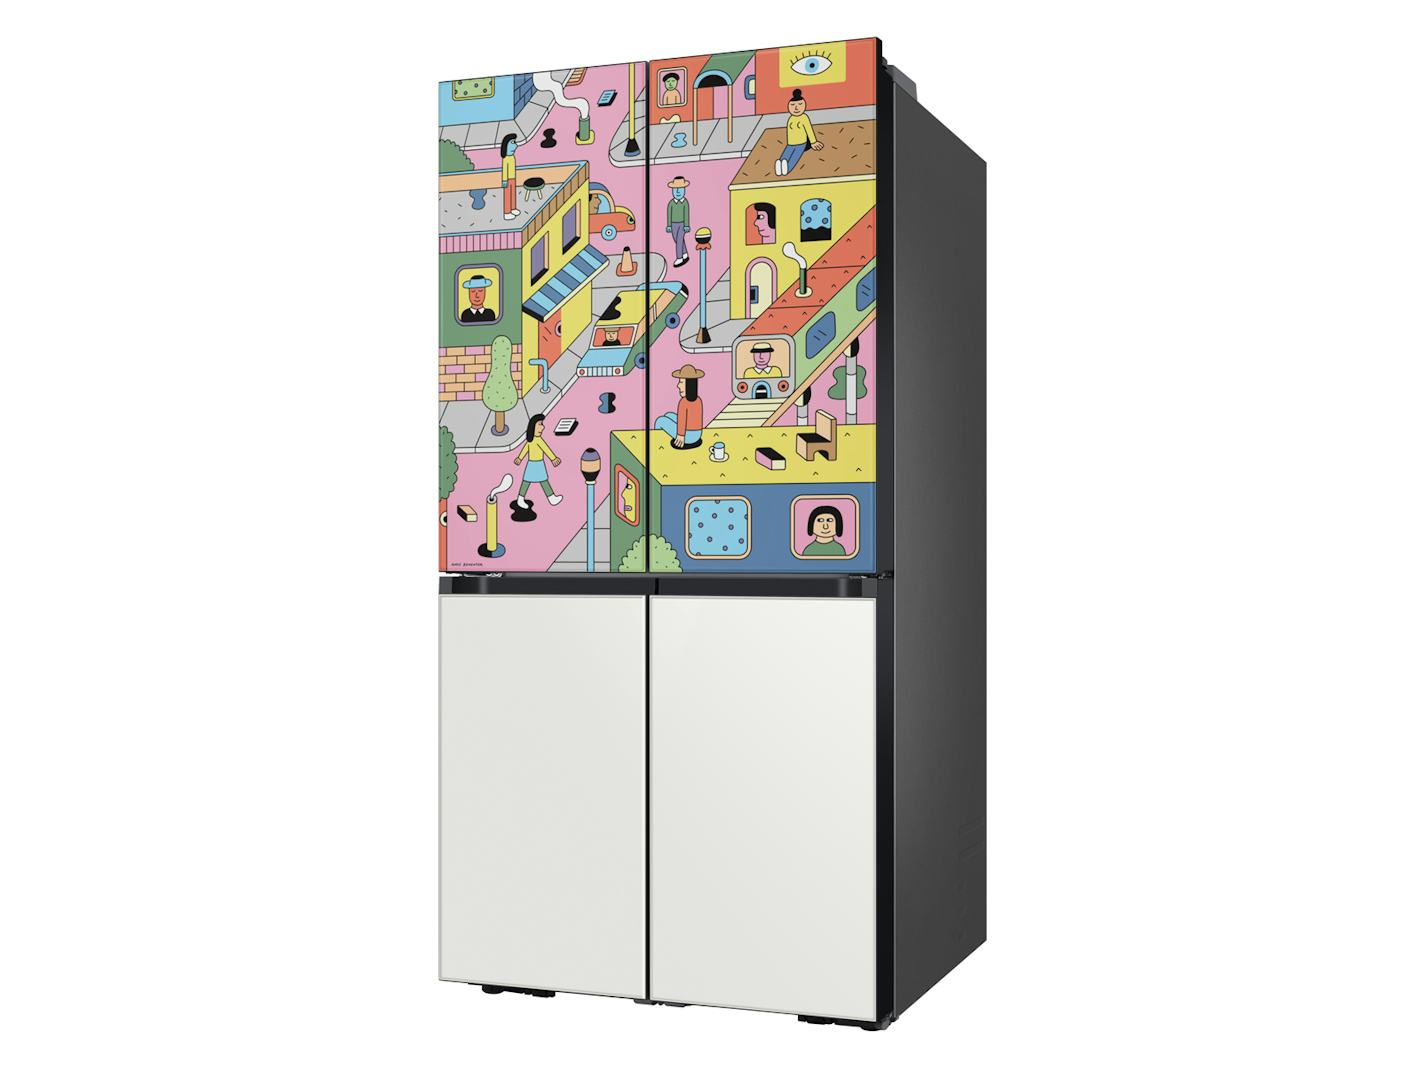 samsung-s-bespoke-fridges-are-getting-the-hypebeast-treatment